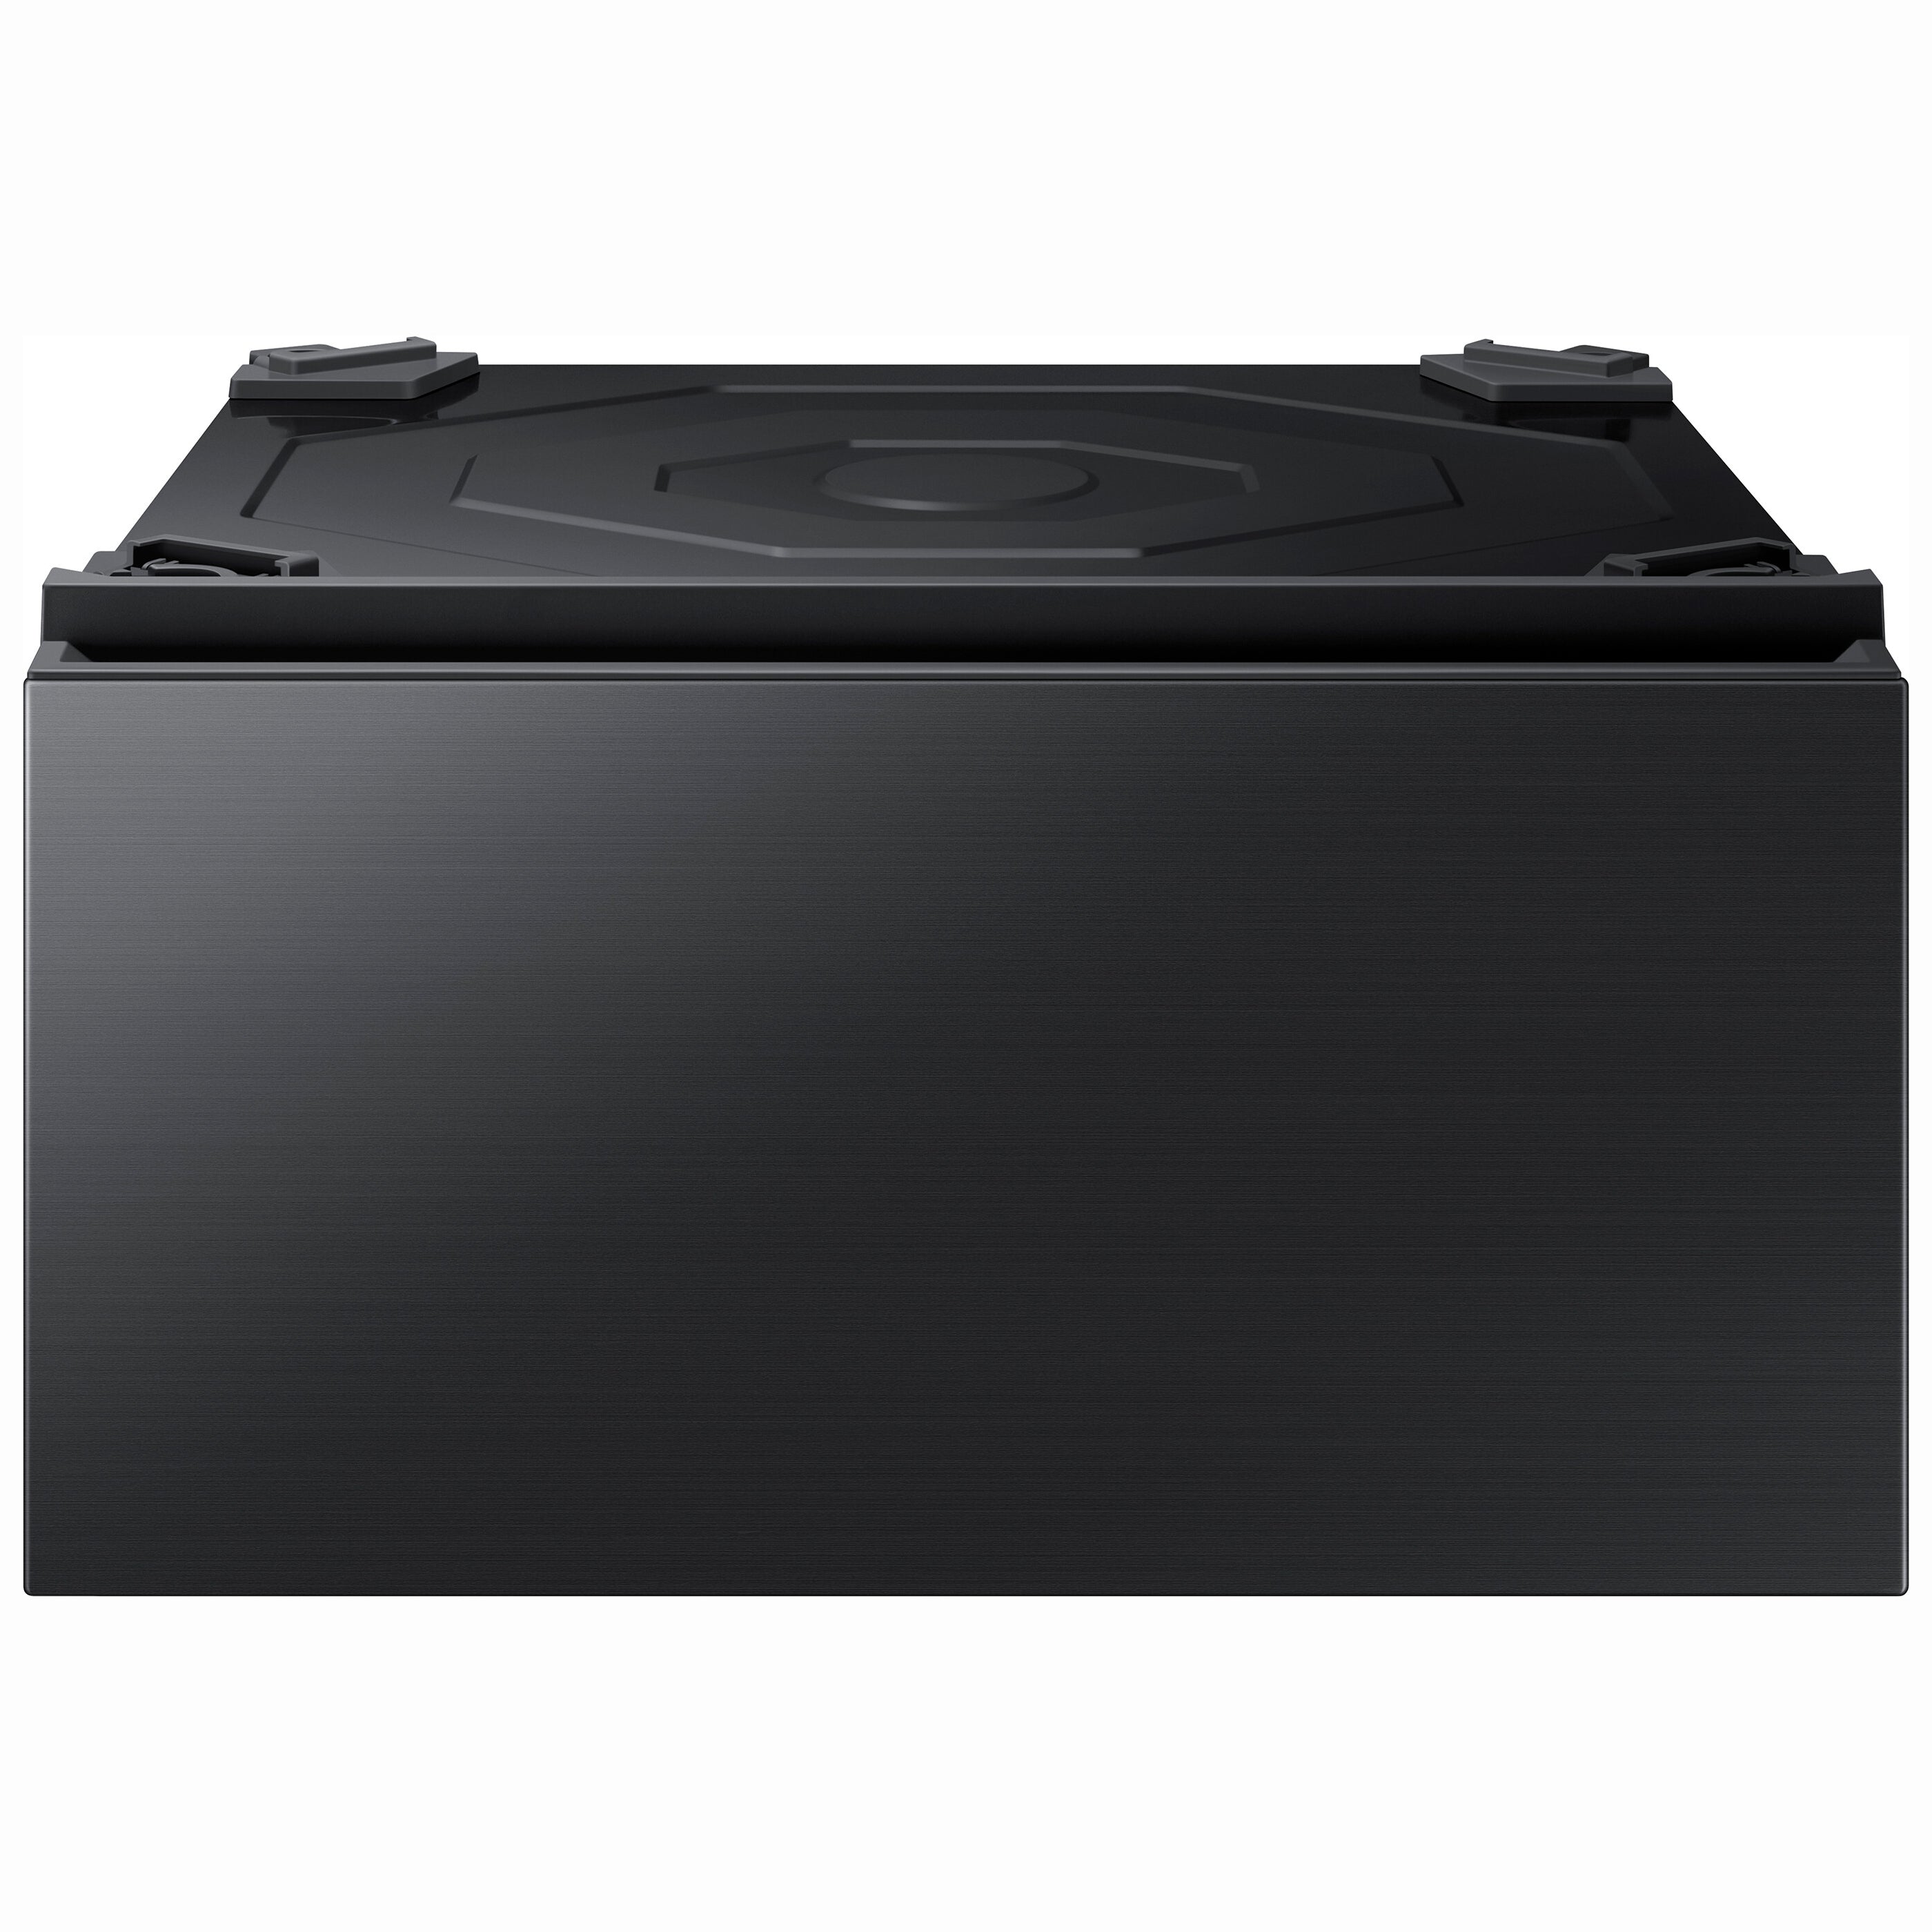 WE502NV - PEDESTALS - Samsung - Storage Drawer - Black Steel - Open Box - PEDESTALS - BonPrix Électroménagers